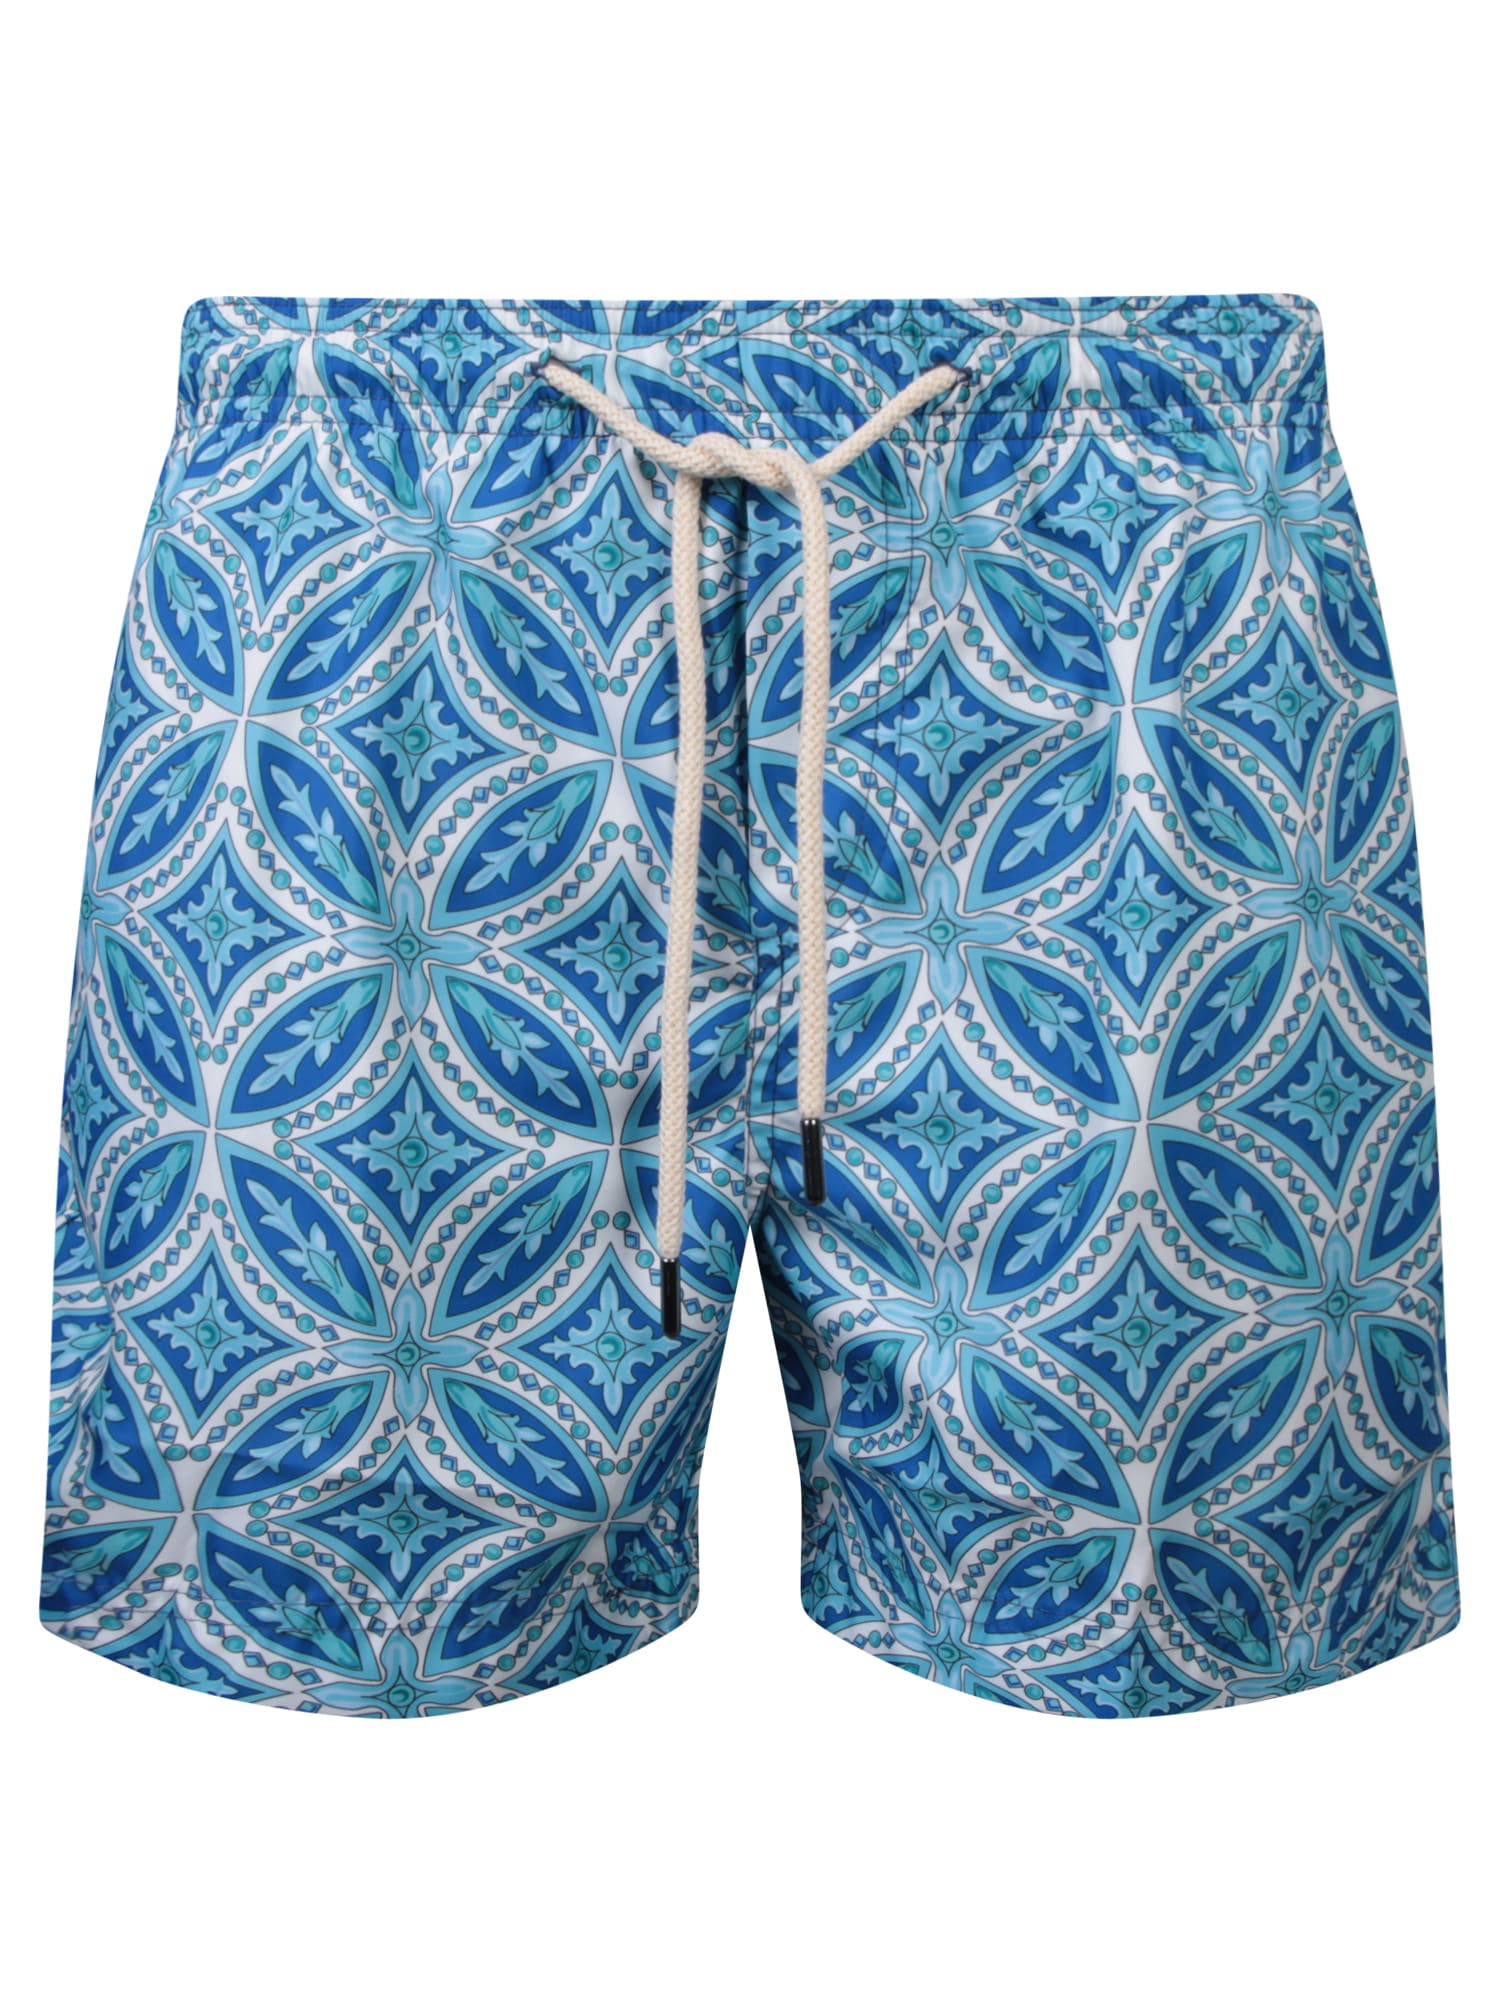 Shop Peninsula Swimwear Patterned Swim Shorts In Sky Blue/blue/white By Peninsula